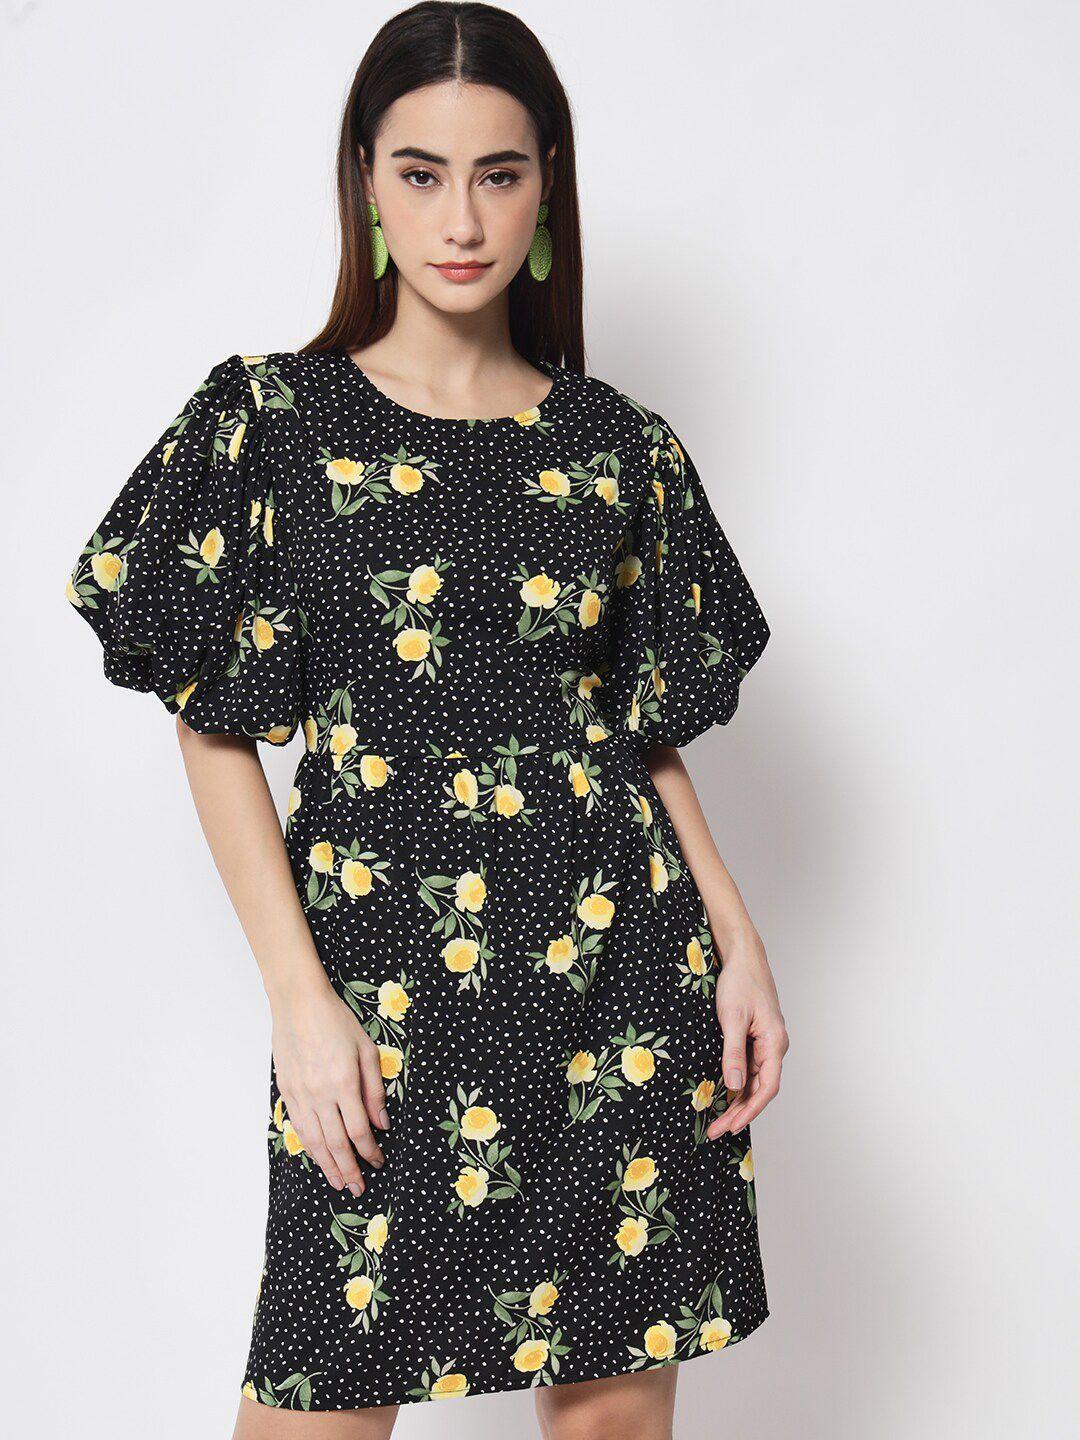 veldress women black & yellow floral printed a-line dress